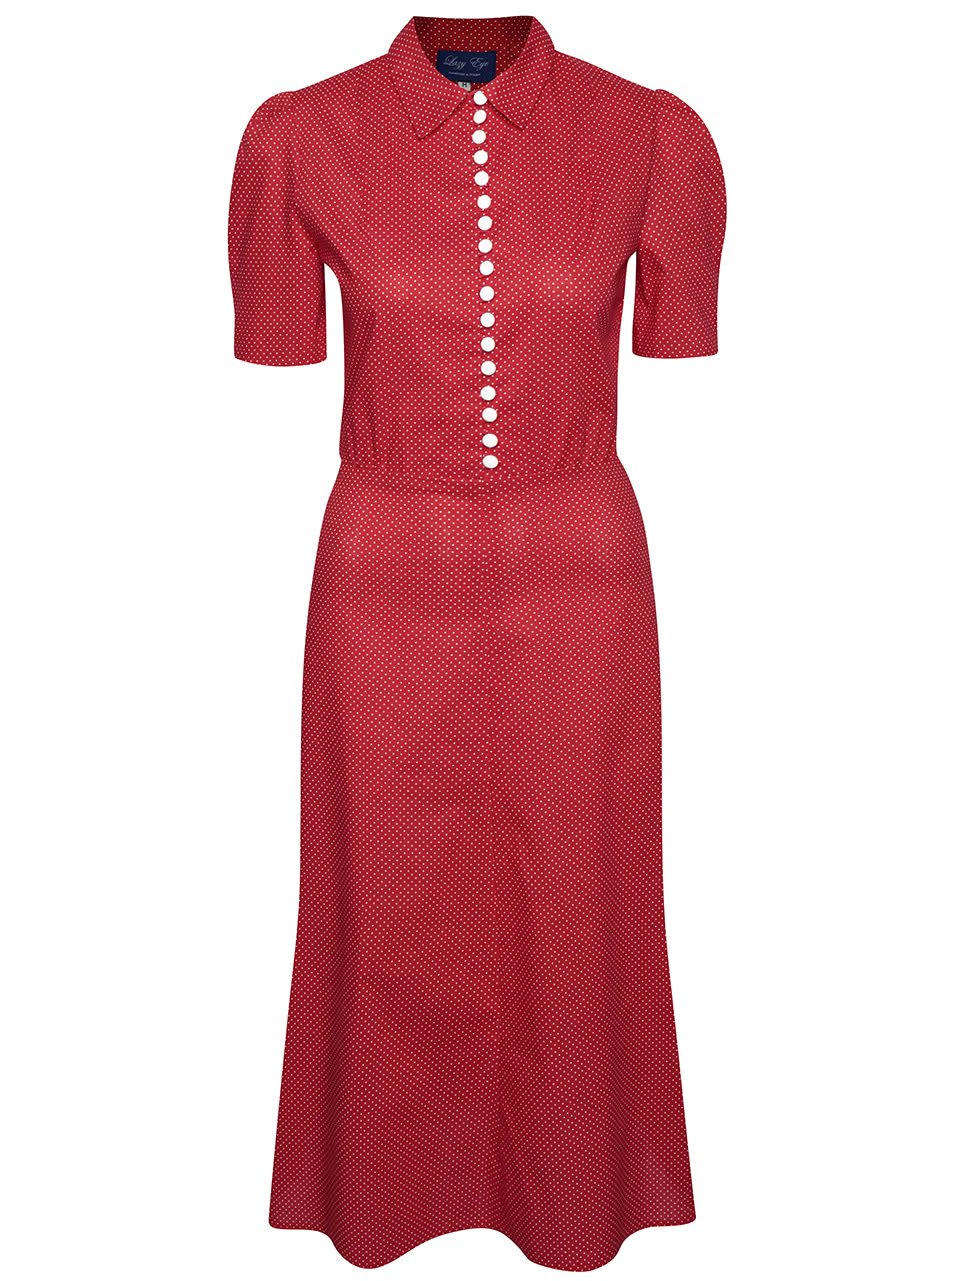 Červené puntíkované retro šaty s knoflíky Lazy Eye Marlen